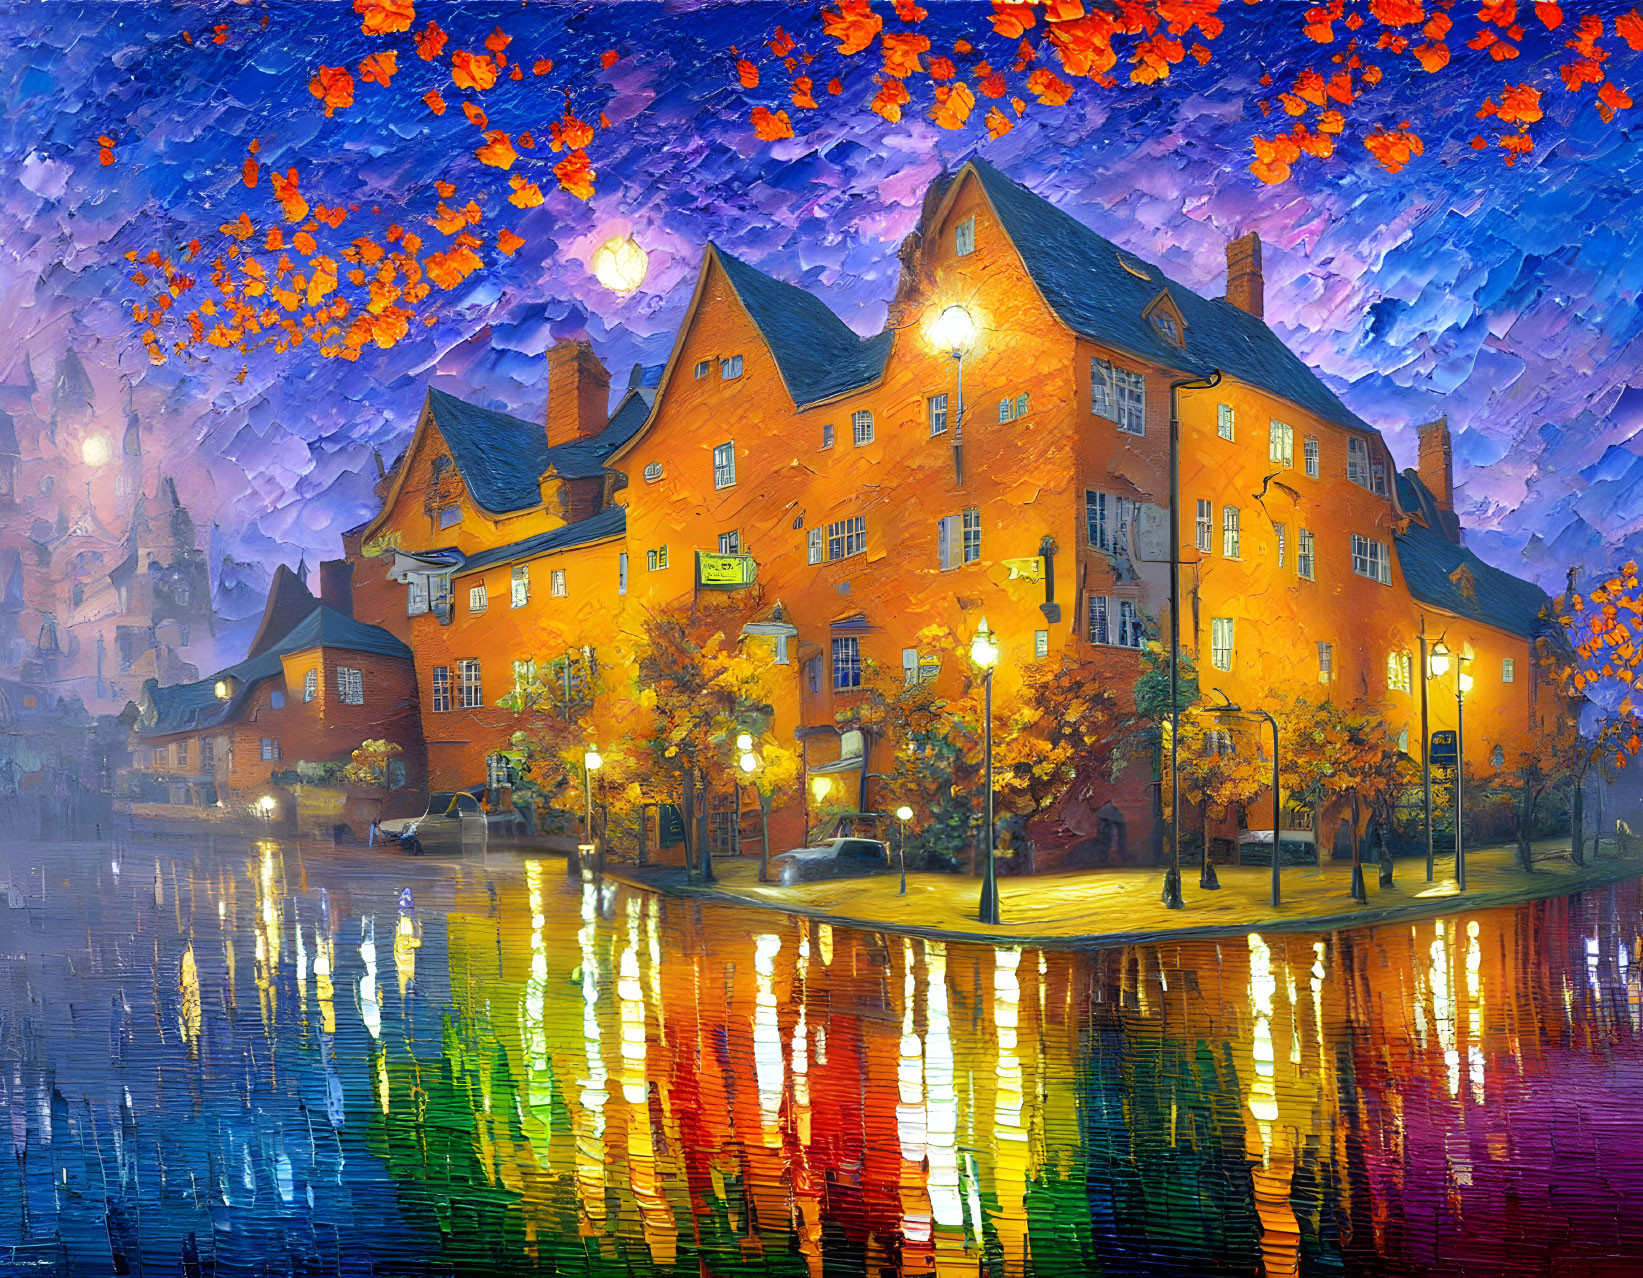 Cozy, luminous street scene with orange buildings at twilight and autumn leaves.